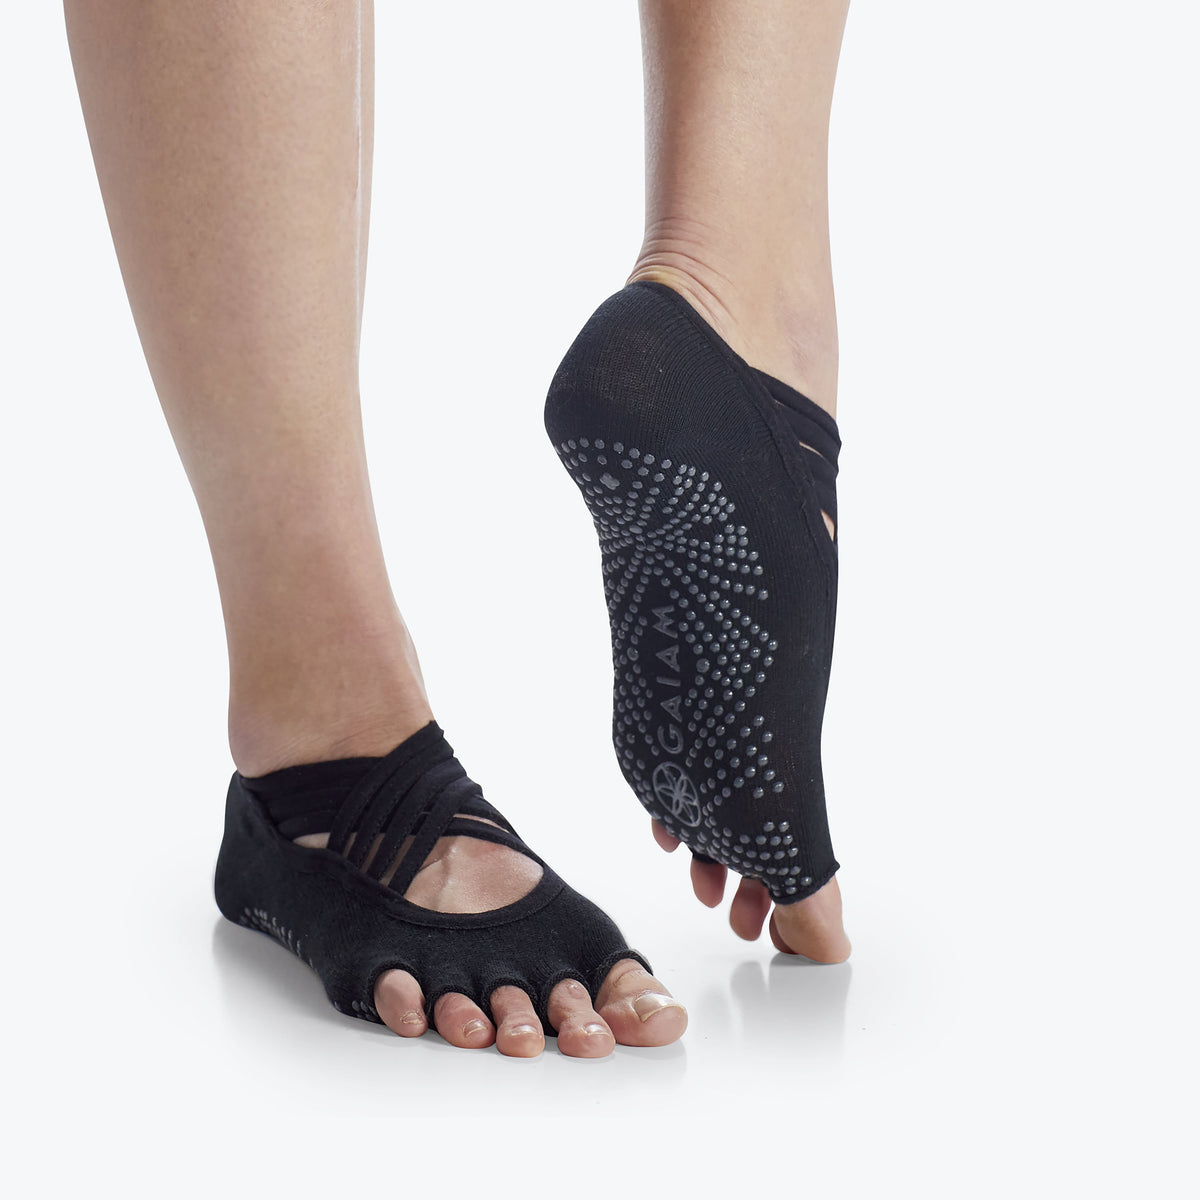 Grippy yoga socks on woman's feet.